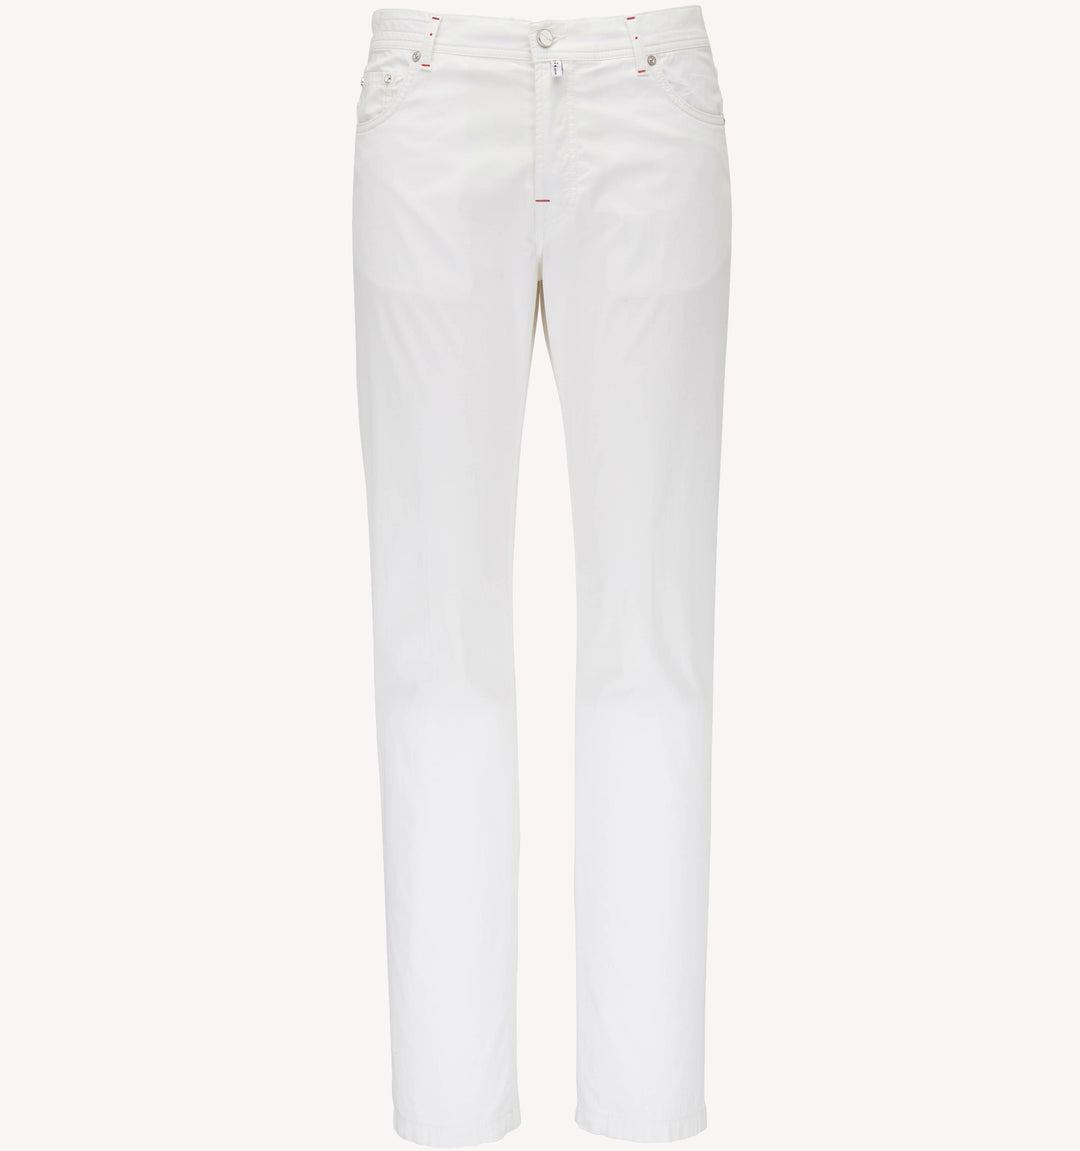 Kiton 5-Pocket Jeans in White